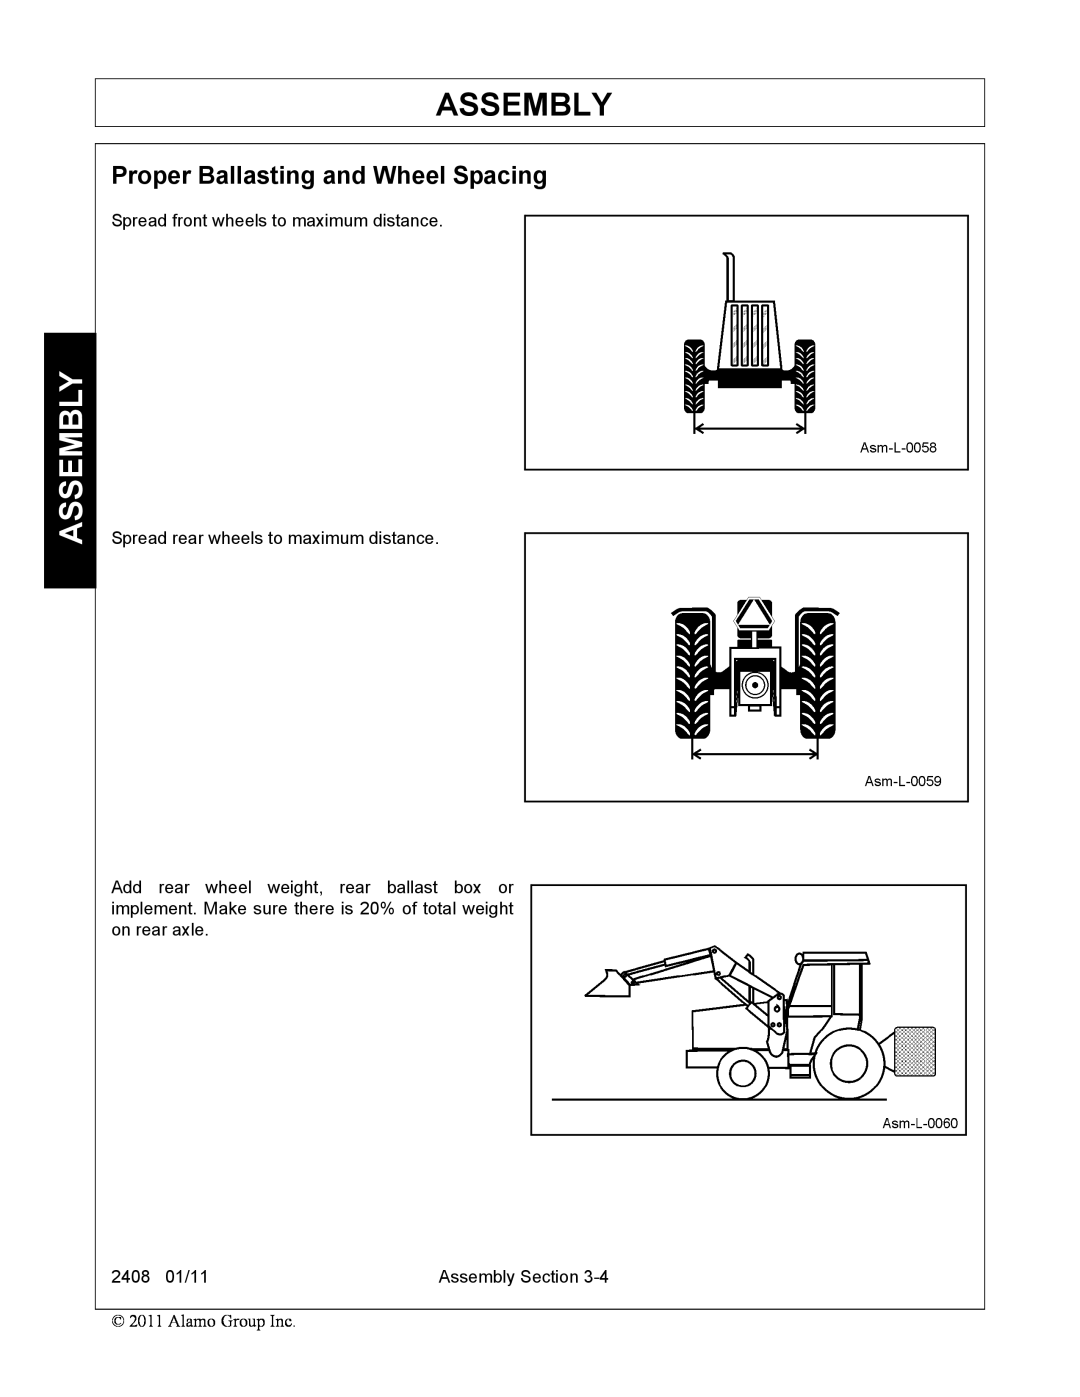 Rhino Mounts 2408 manual Assembly, Proper Ballasting and Wheel Spacing 